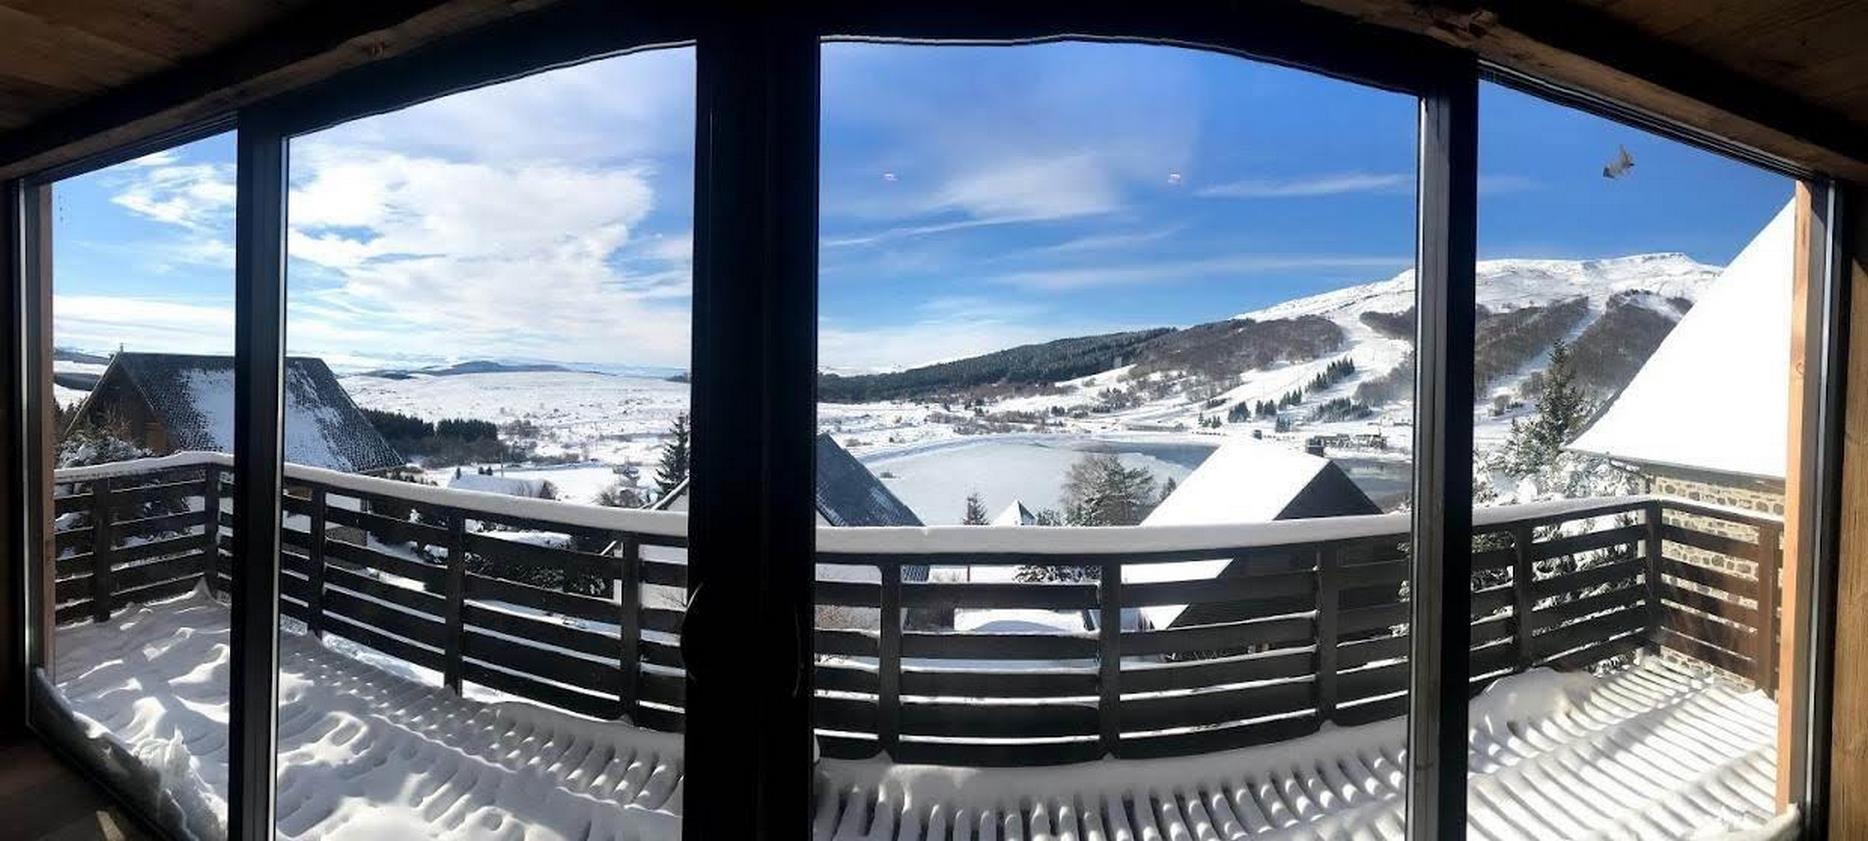 Rental Chalet super Besse - Magnificent view of Super Besse under the snow